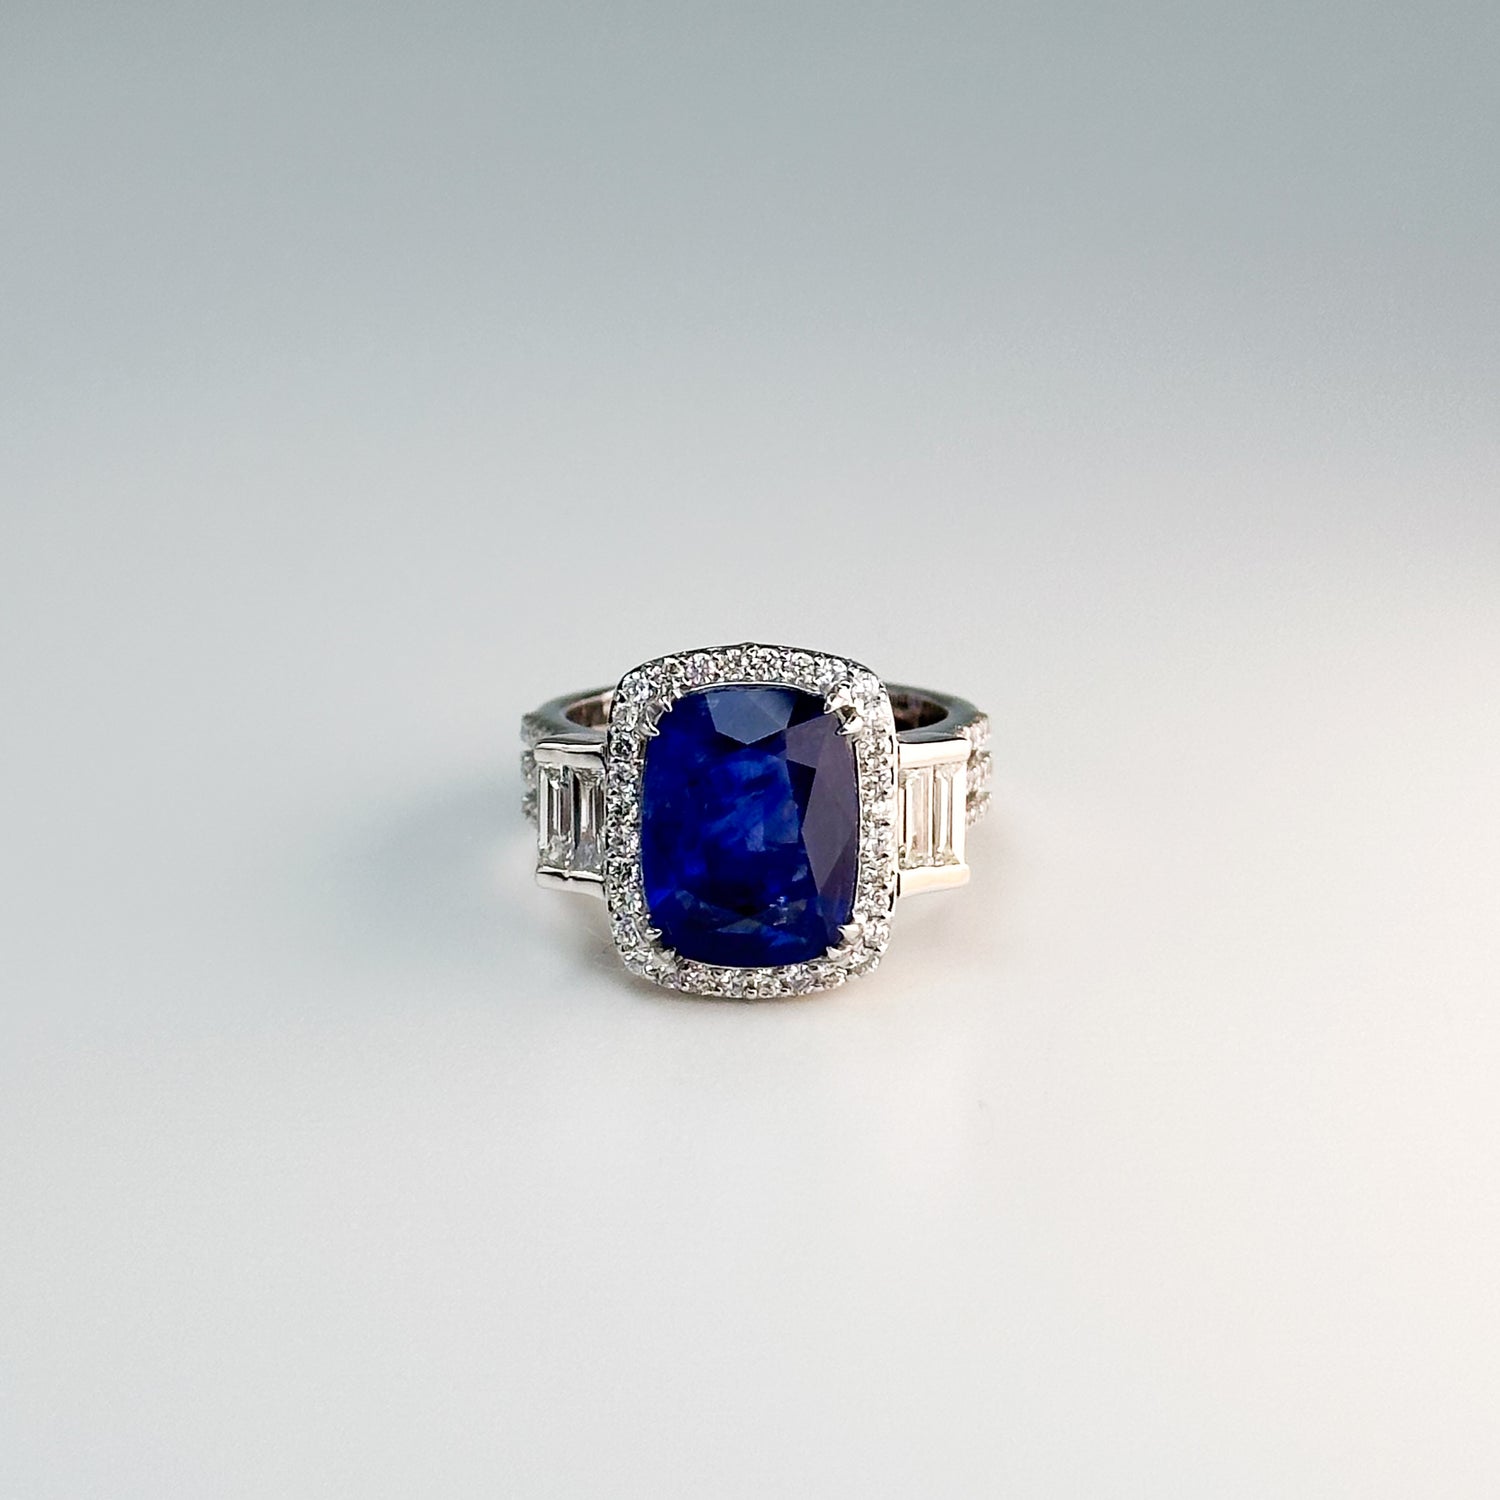 5.83ct Emerald Cut Blue Sapphire Ring